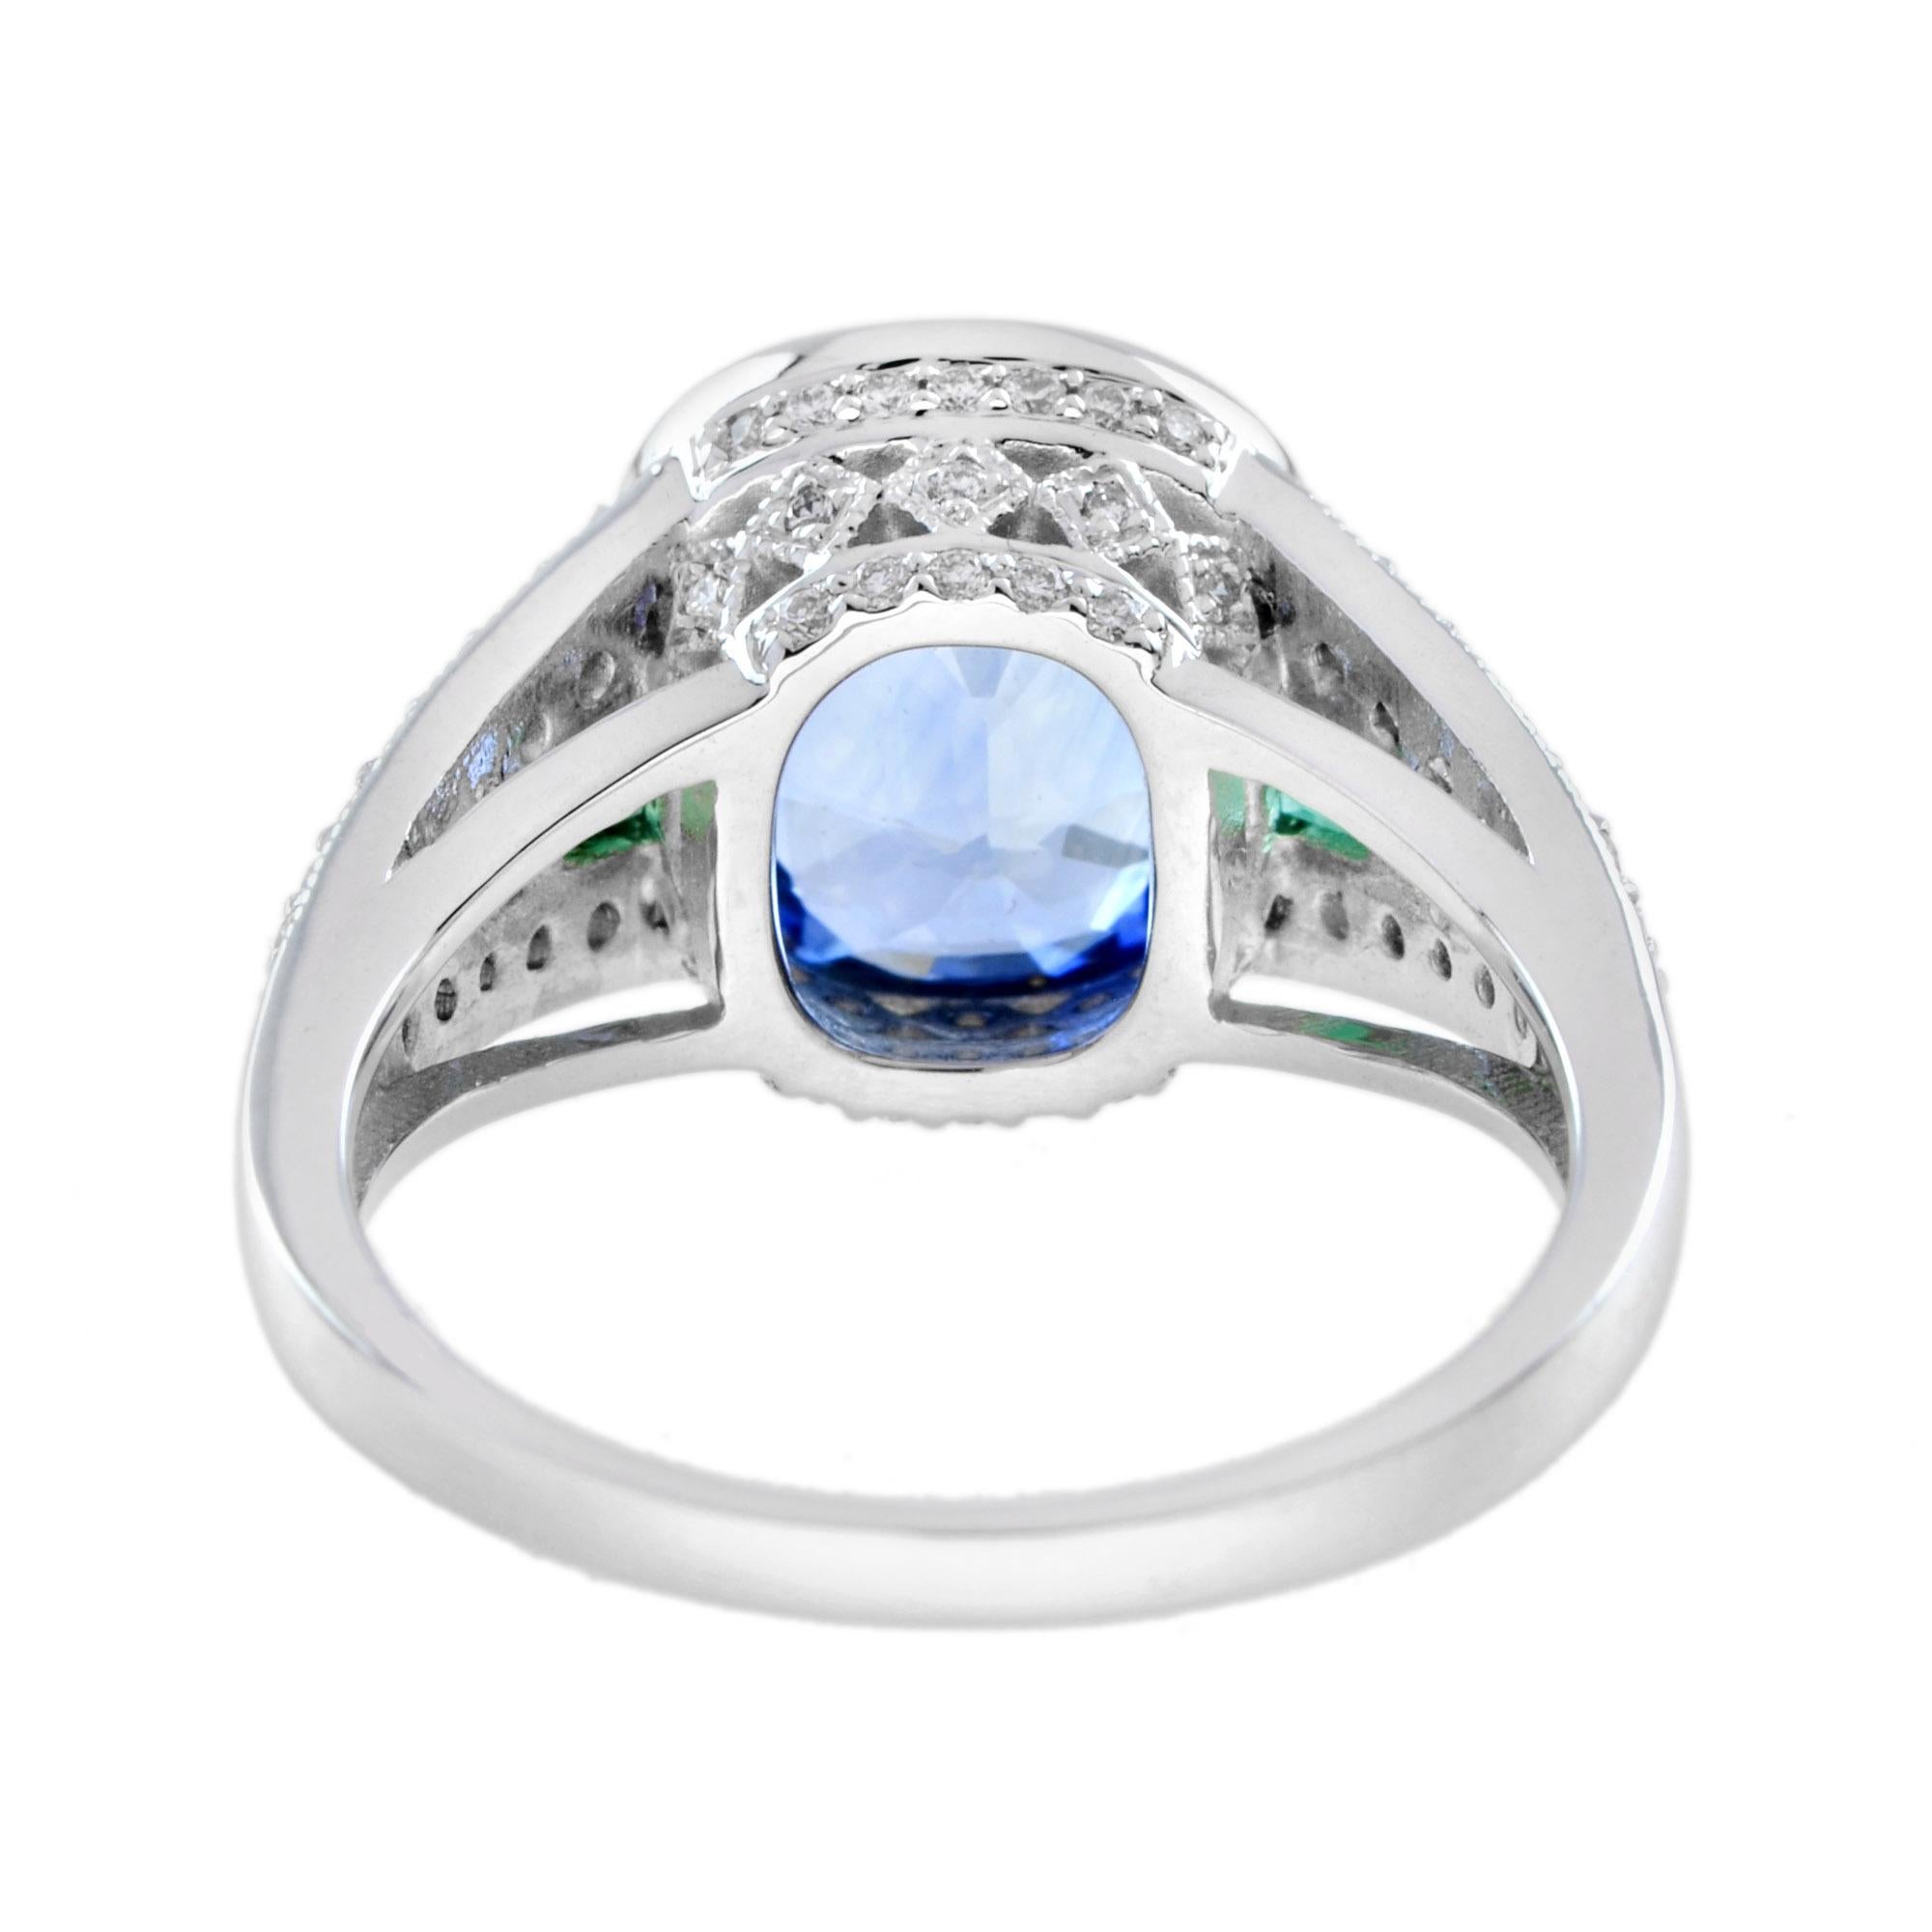 Certified 4.47 Ct. Ceylon Sapphire Emerald Diamond Ring in 18K White Gold For Sale 2